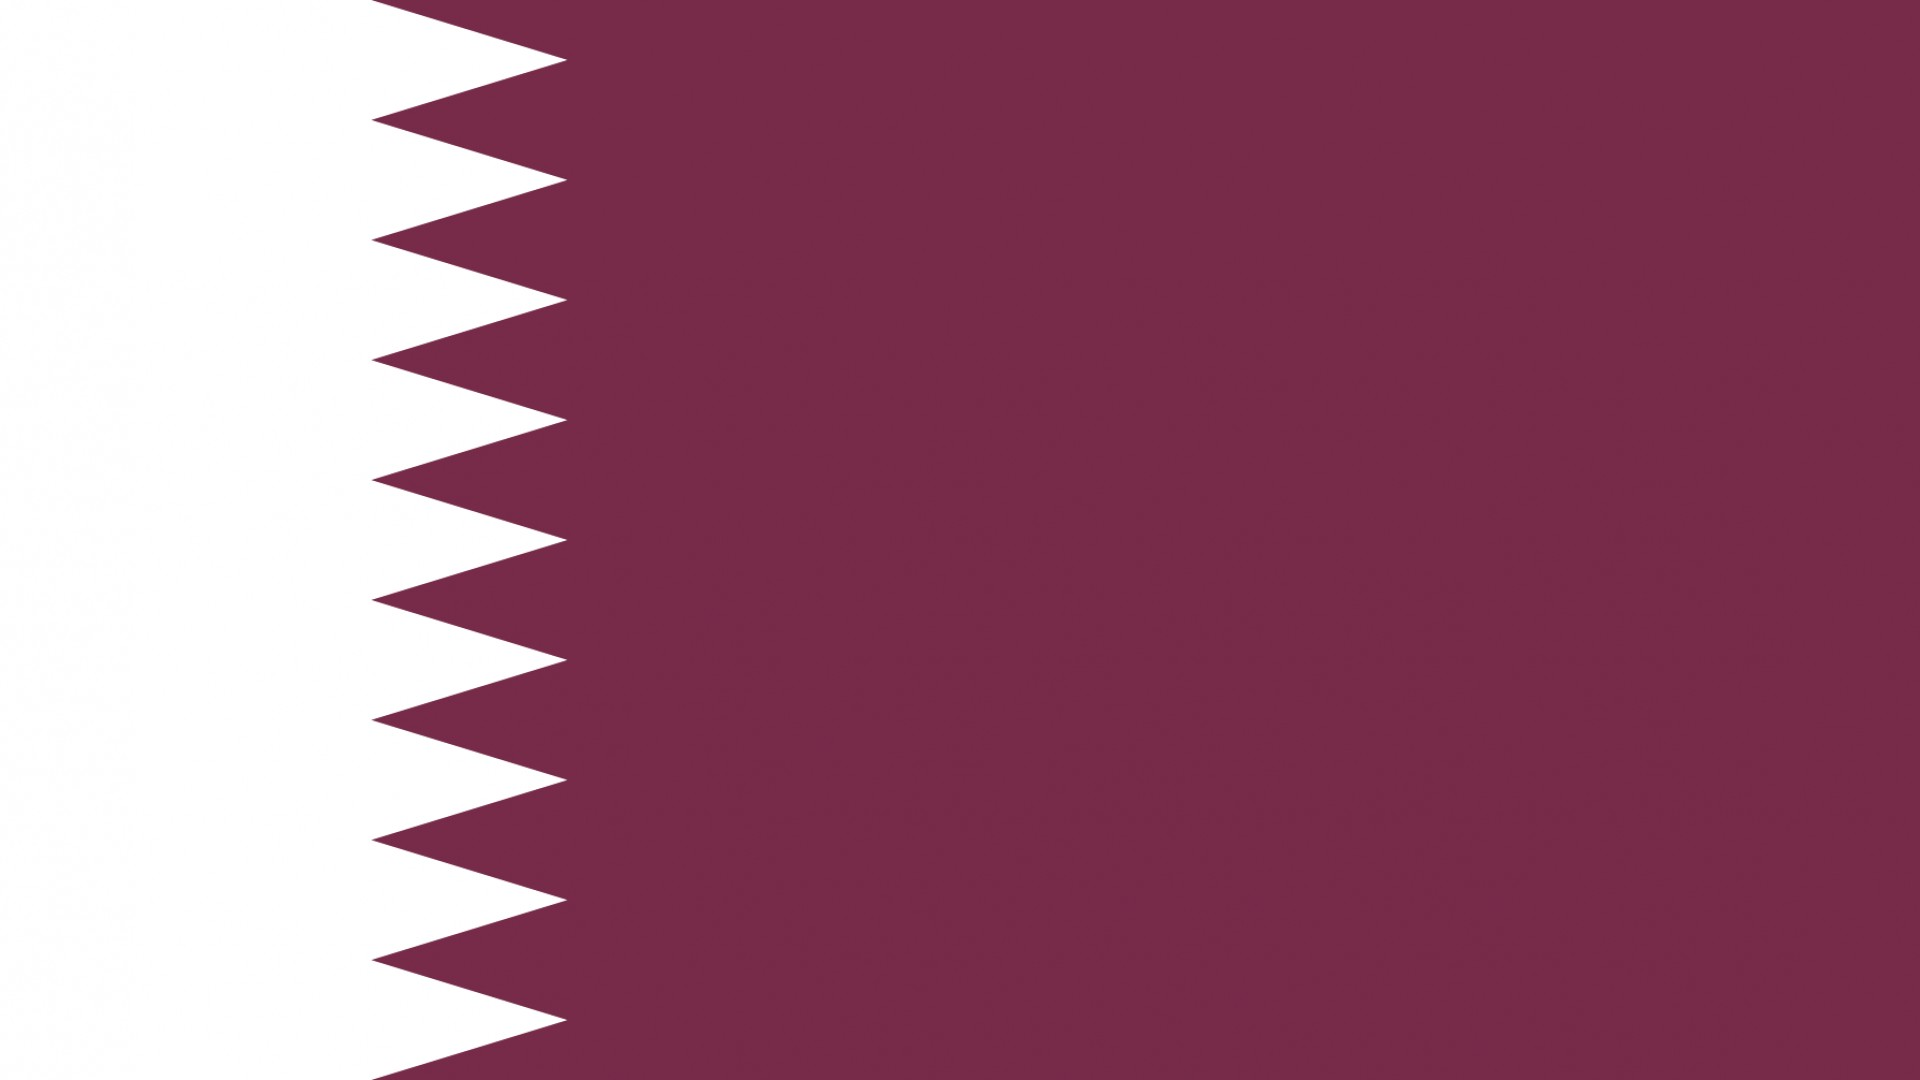 Travel Qatar